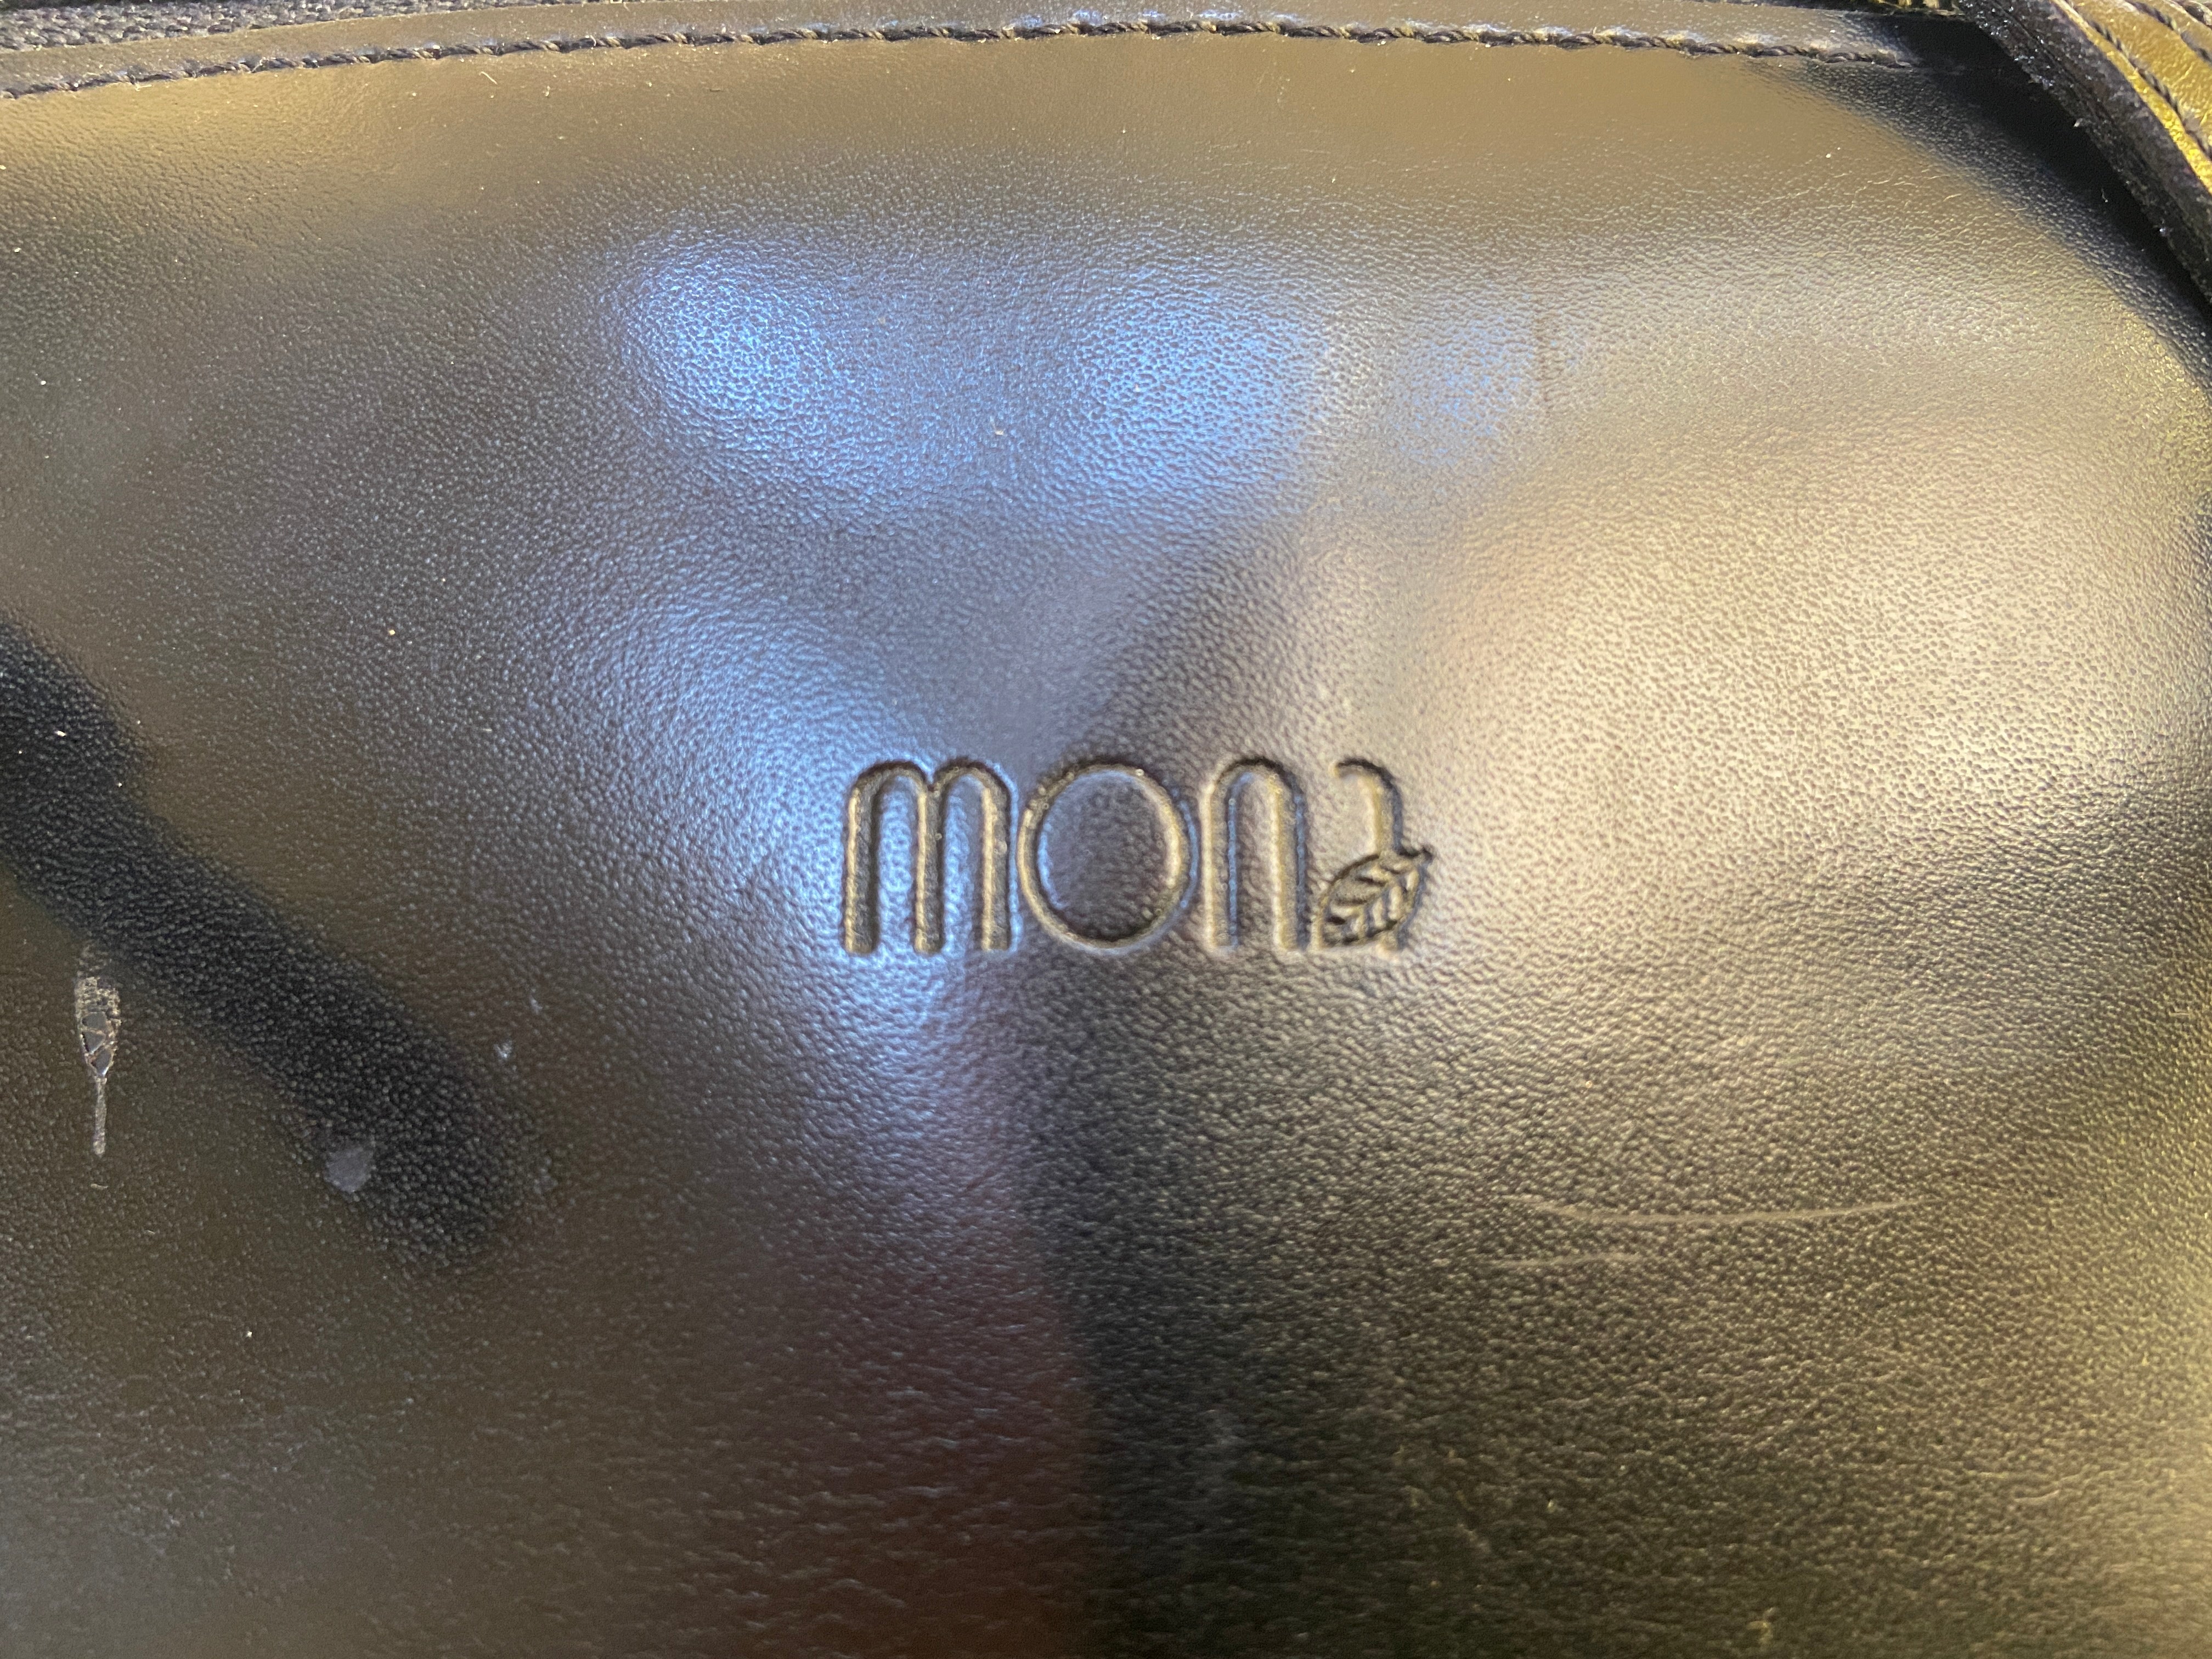 Mona purse